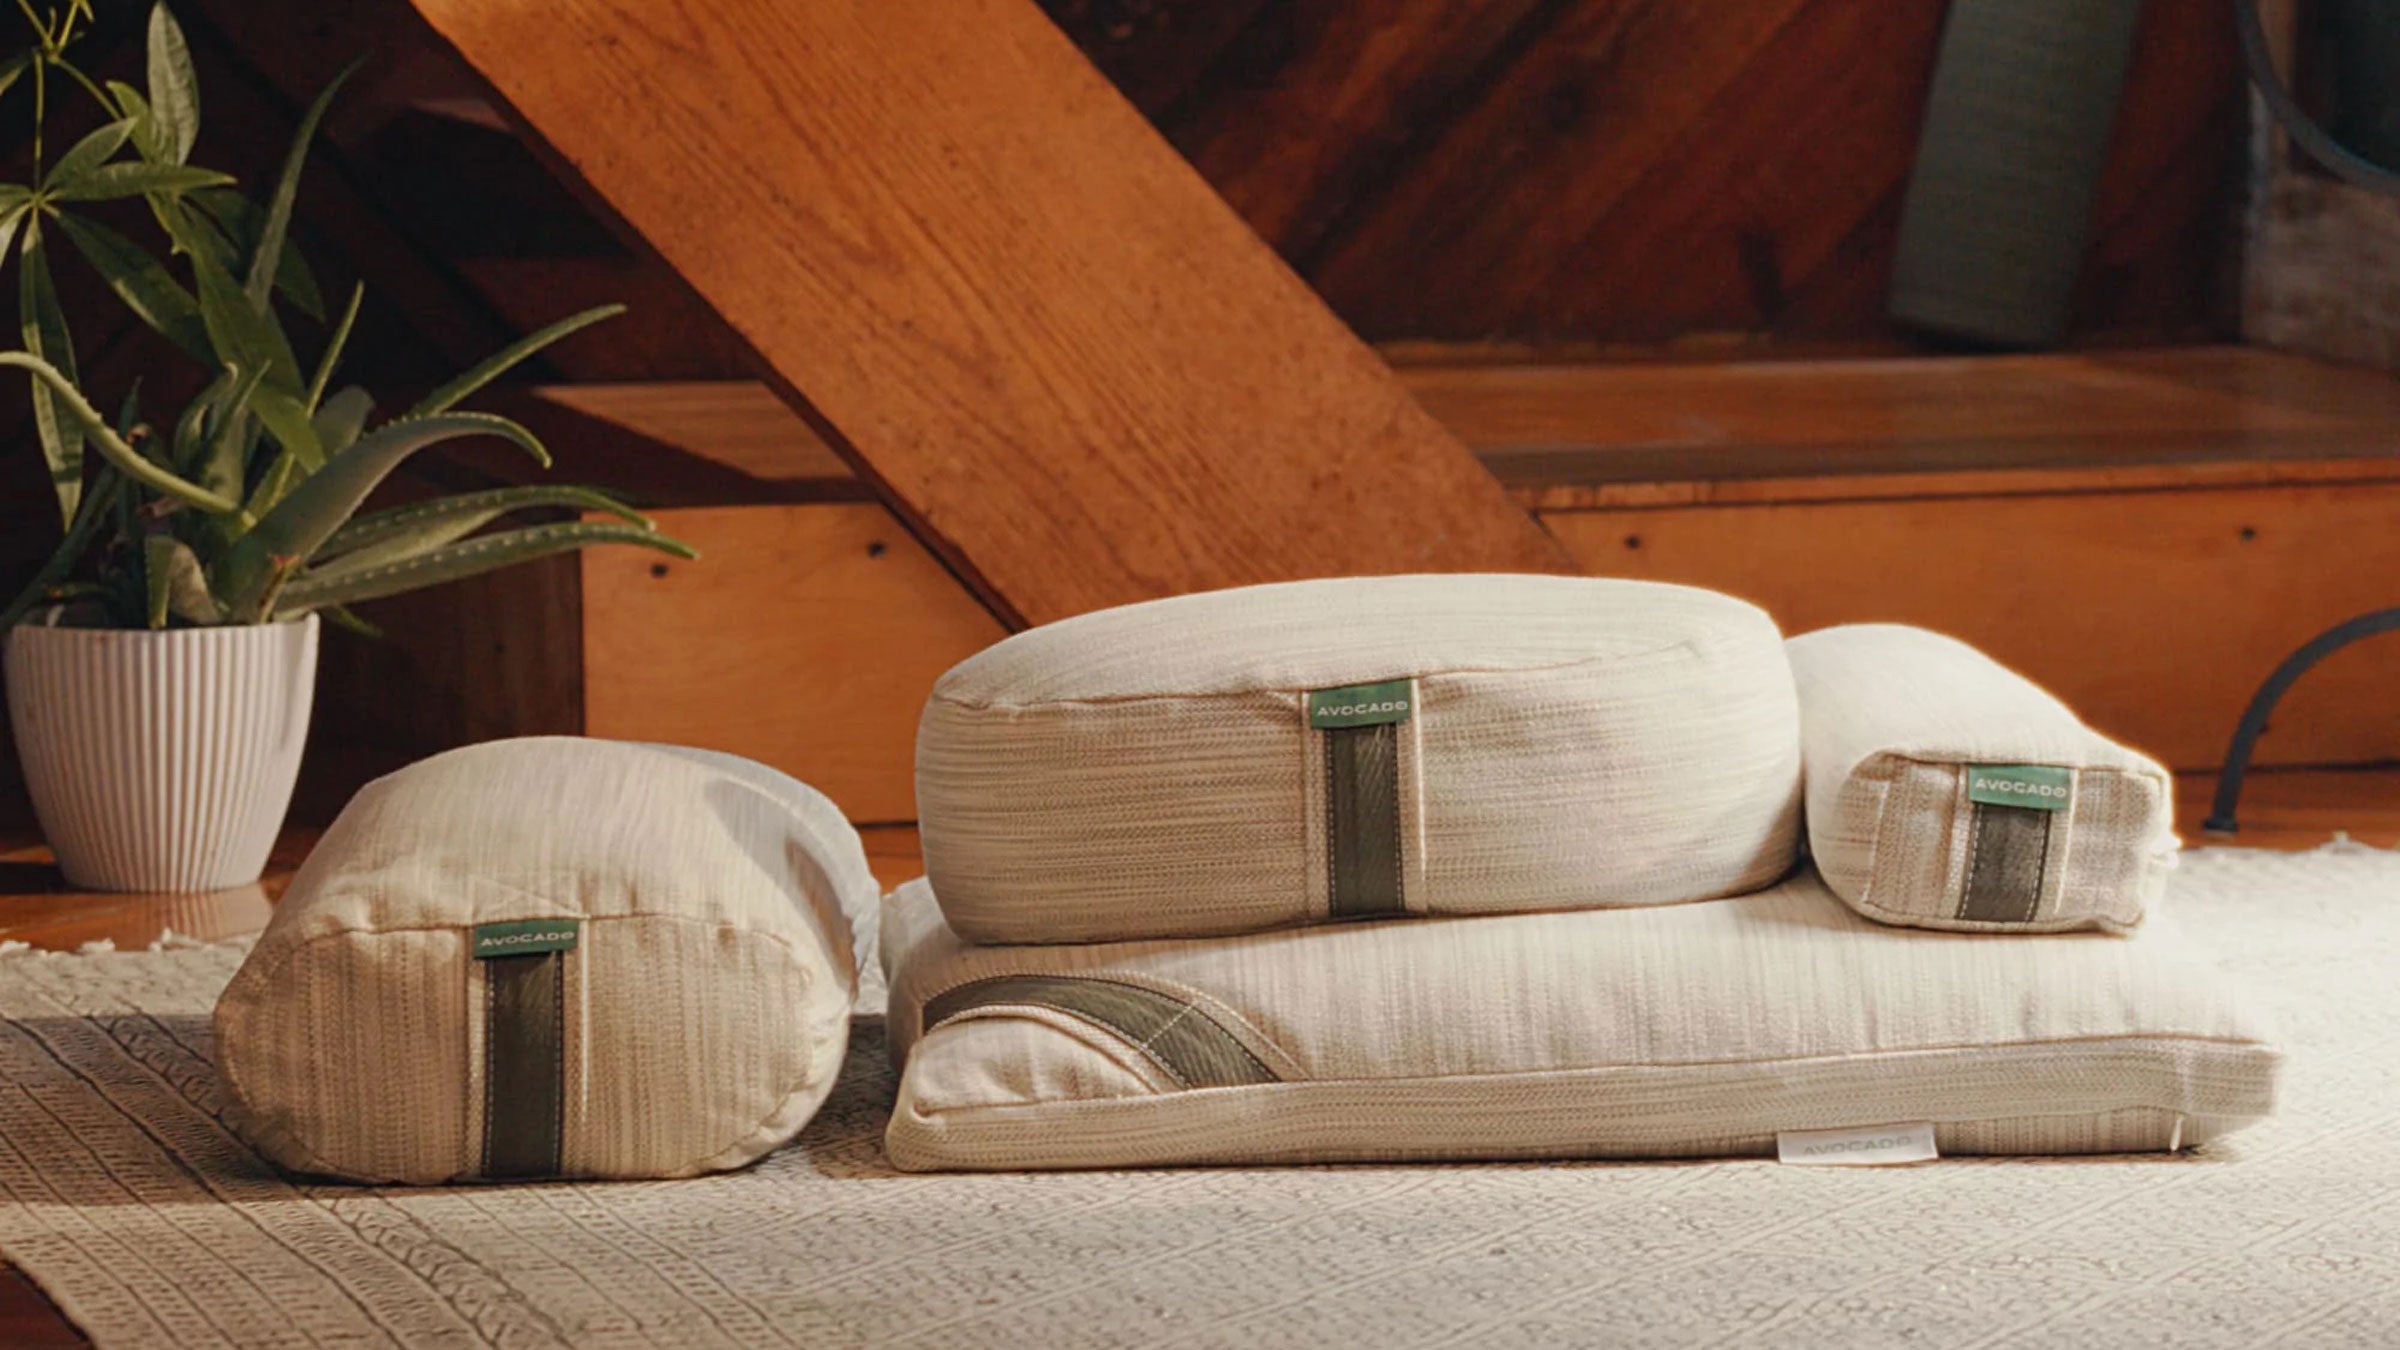 Organic Yoga Meditation Pillows by Avocado